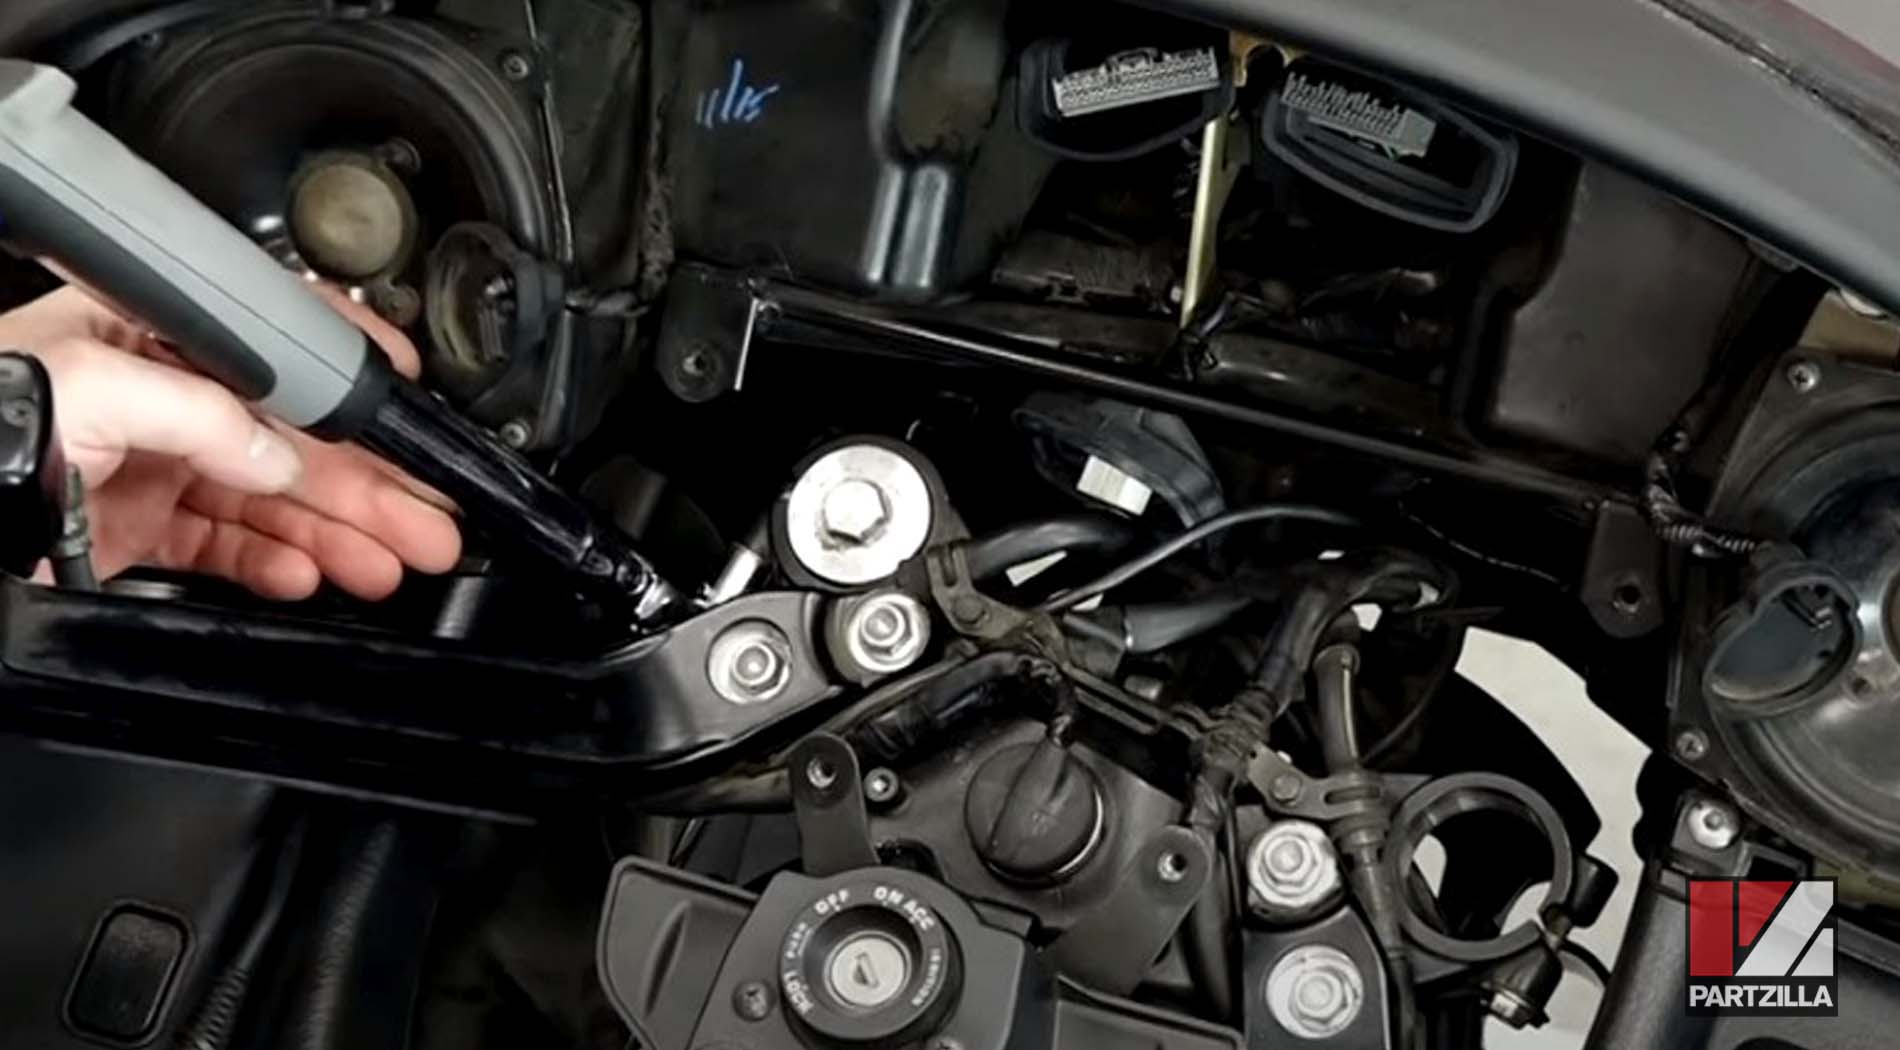 Honda Goldwing GL1800 steering stem bearing change forks reinstallation